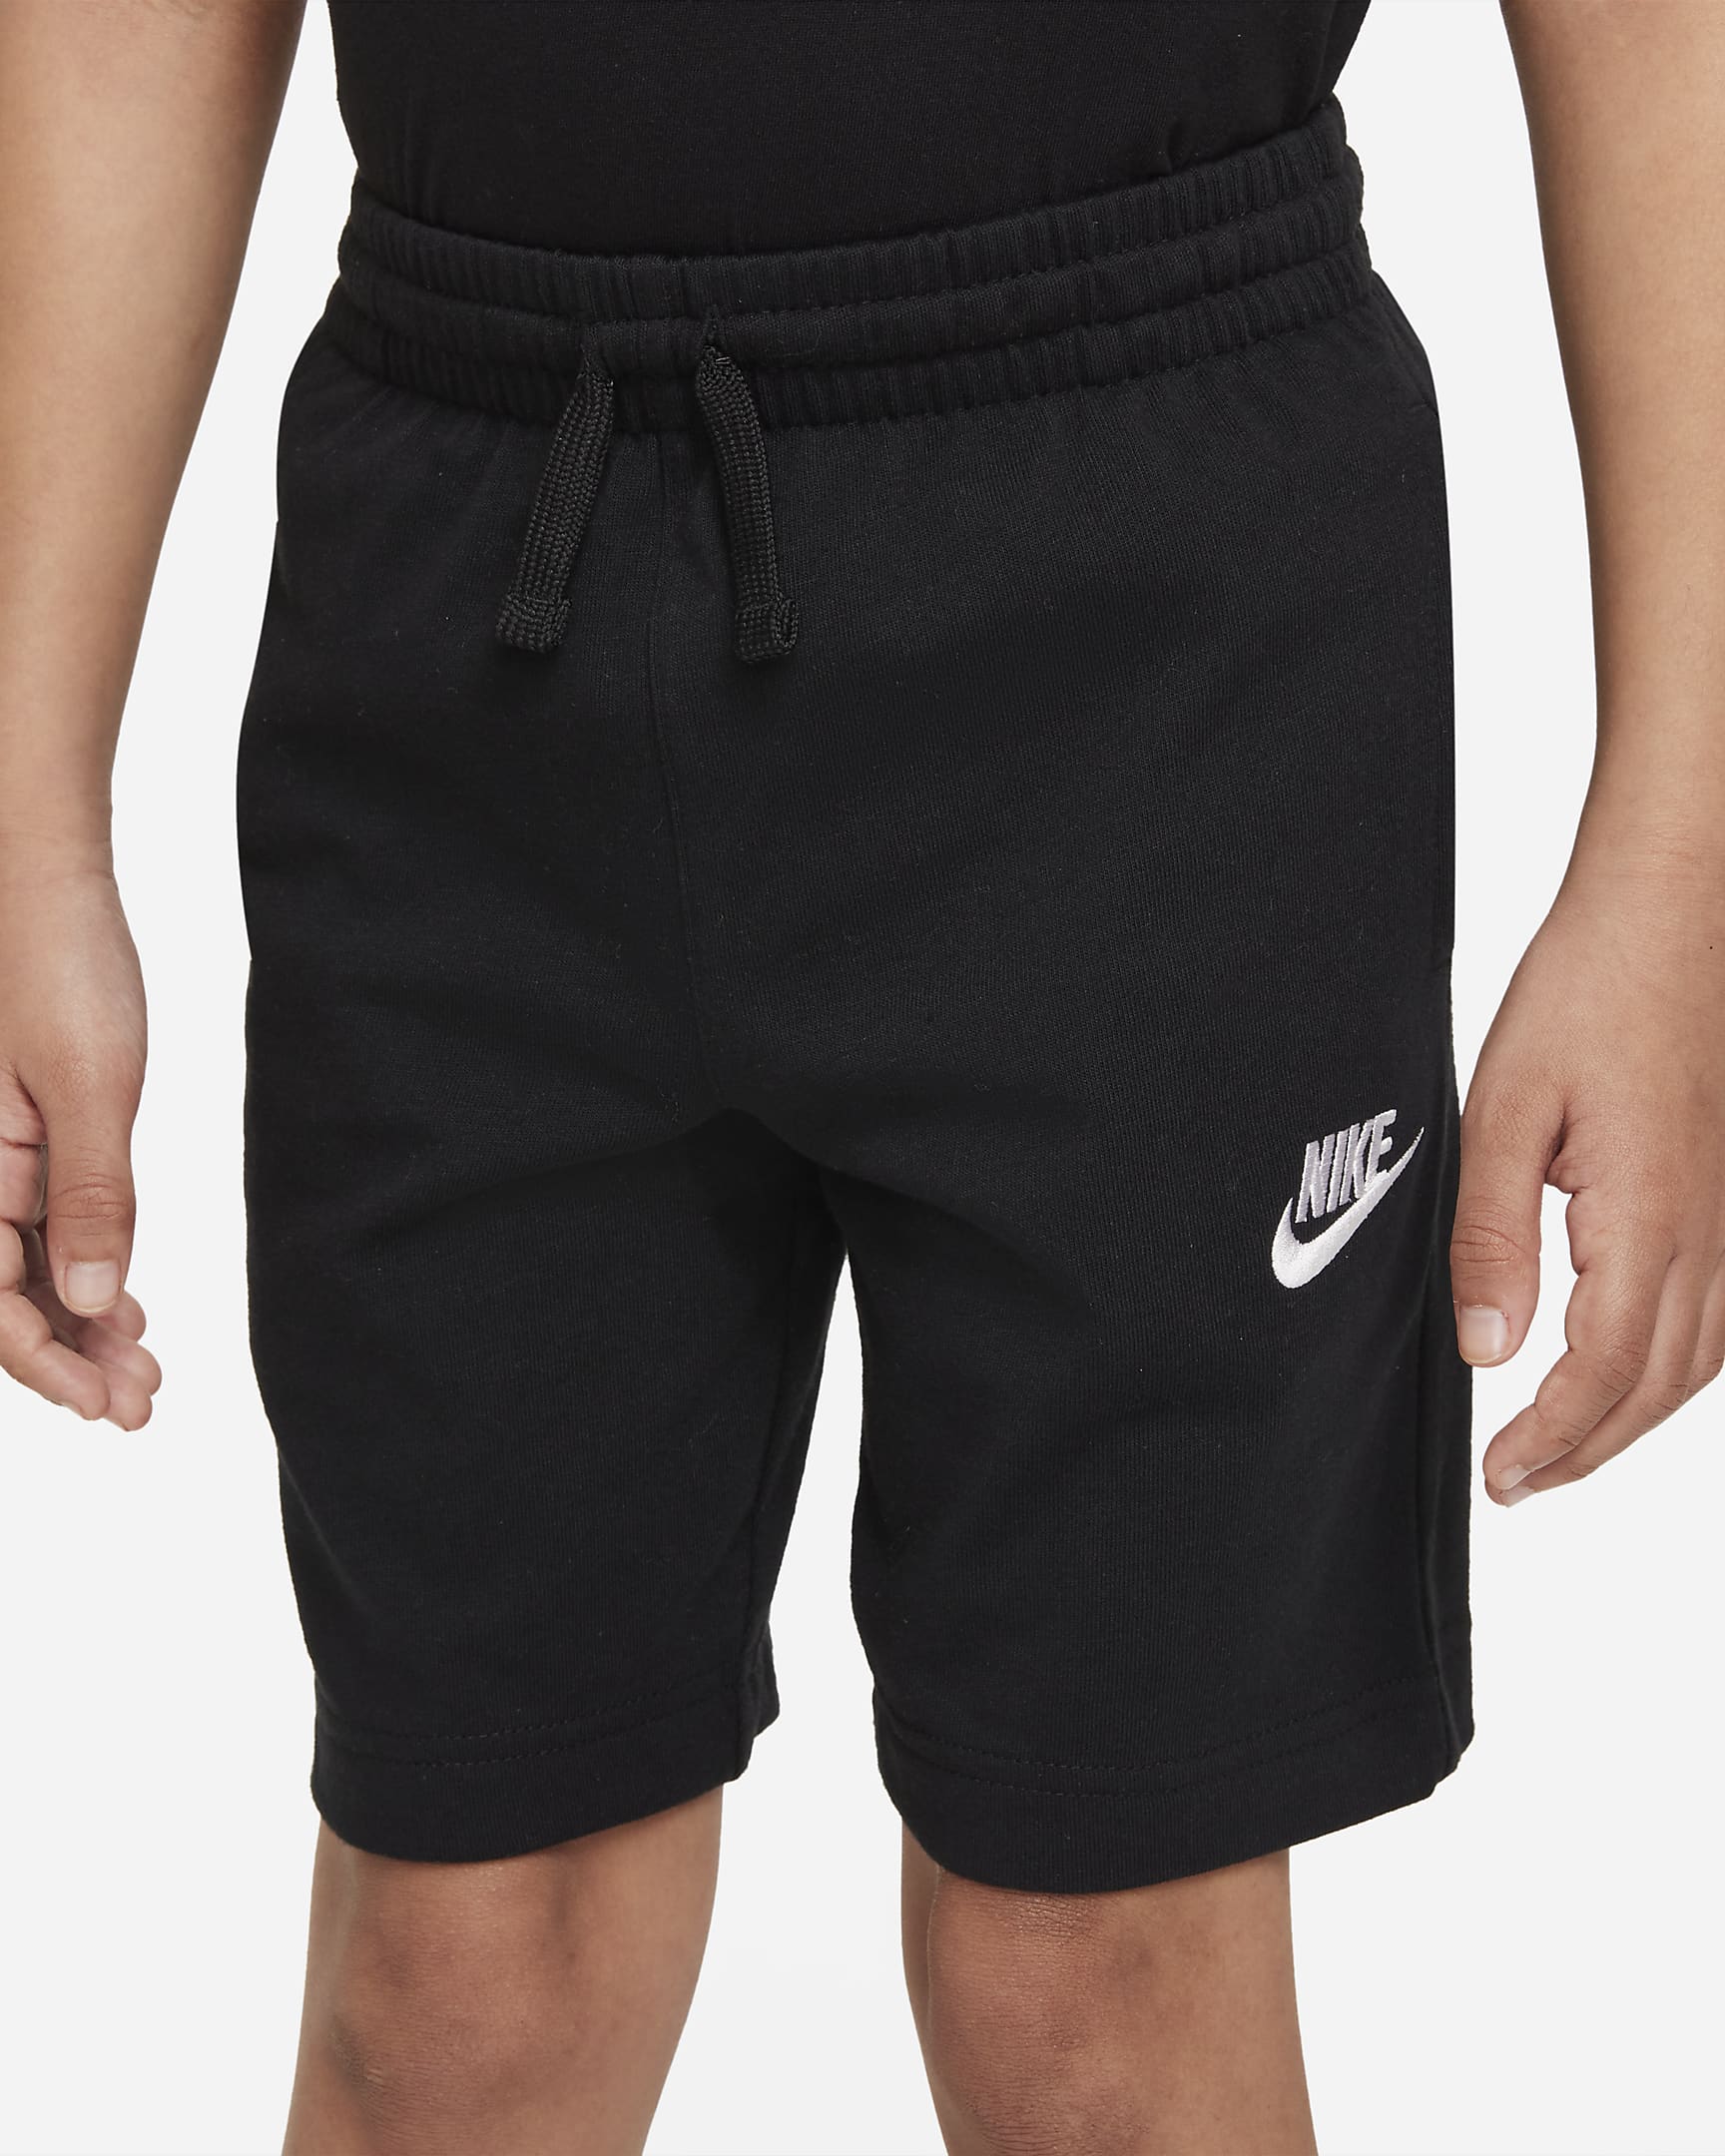 Shorts para niños talla pequeña Nike Sportswear Club. Nike.com